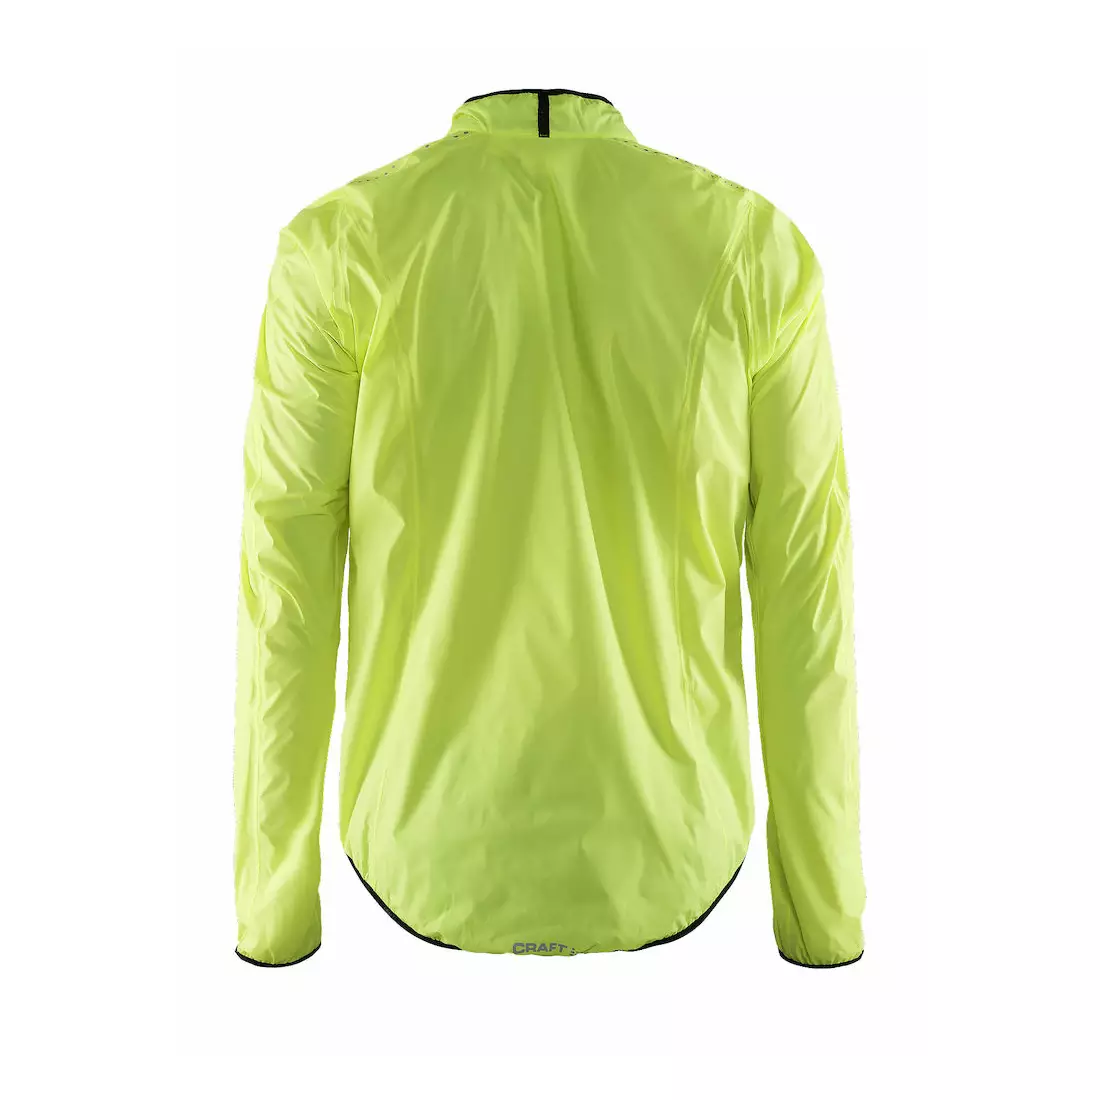 CRAFT MOVE pánská cyklistická bunda odolná proti dešti 1902578-2851 barva: fluor